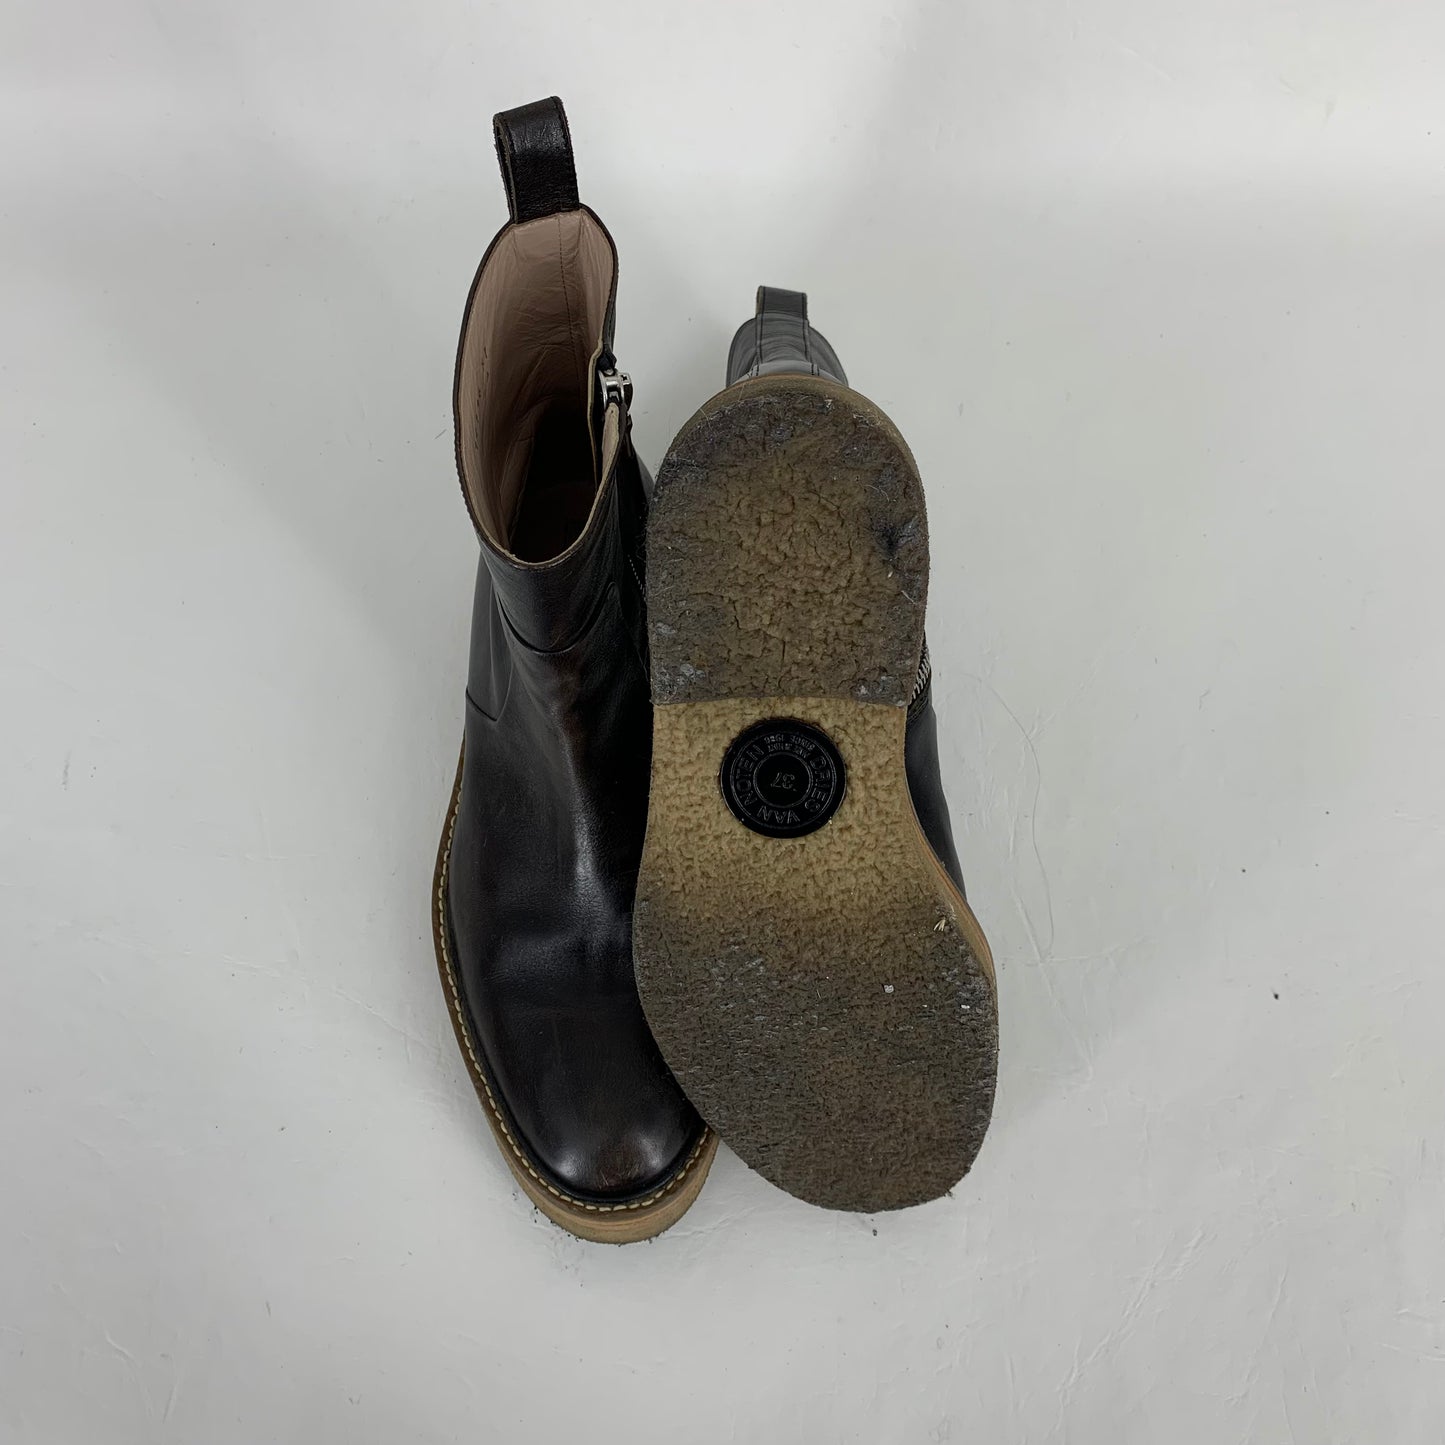 Authentic Dries Van Noten Black Leather Boots Sz 7